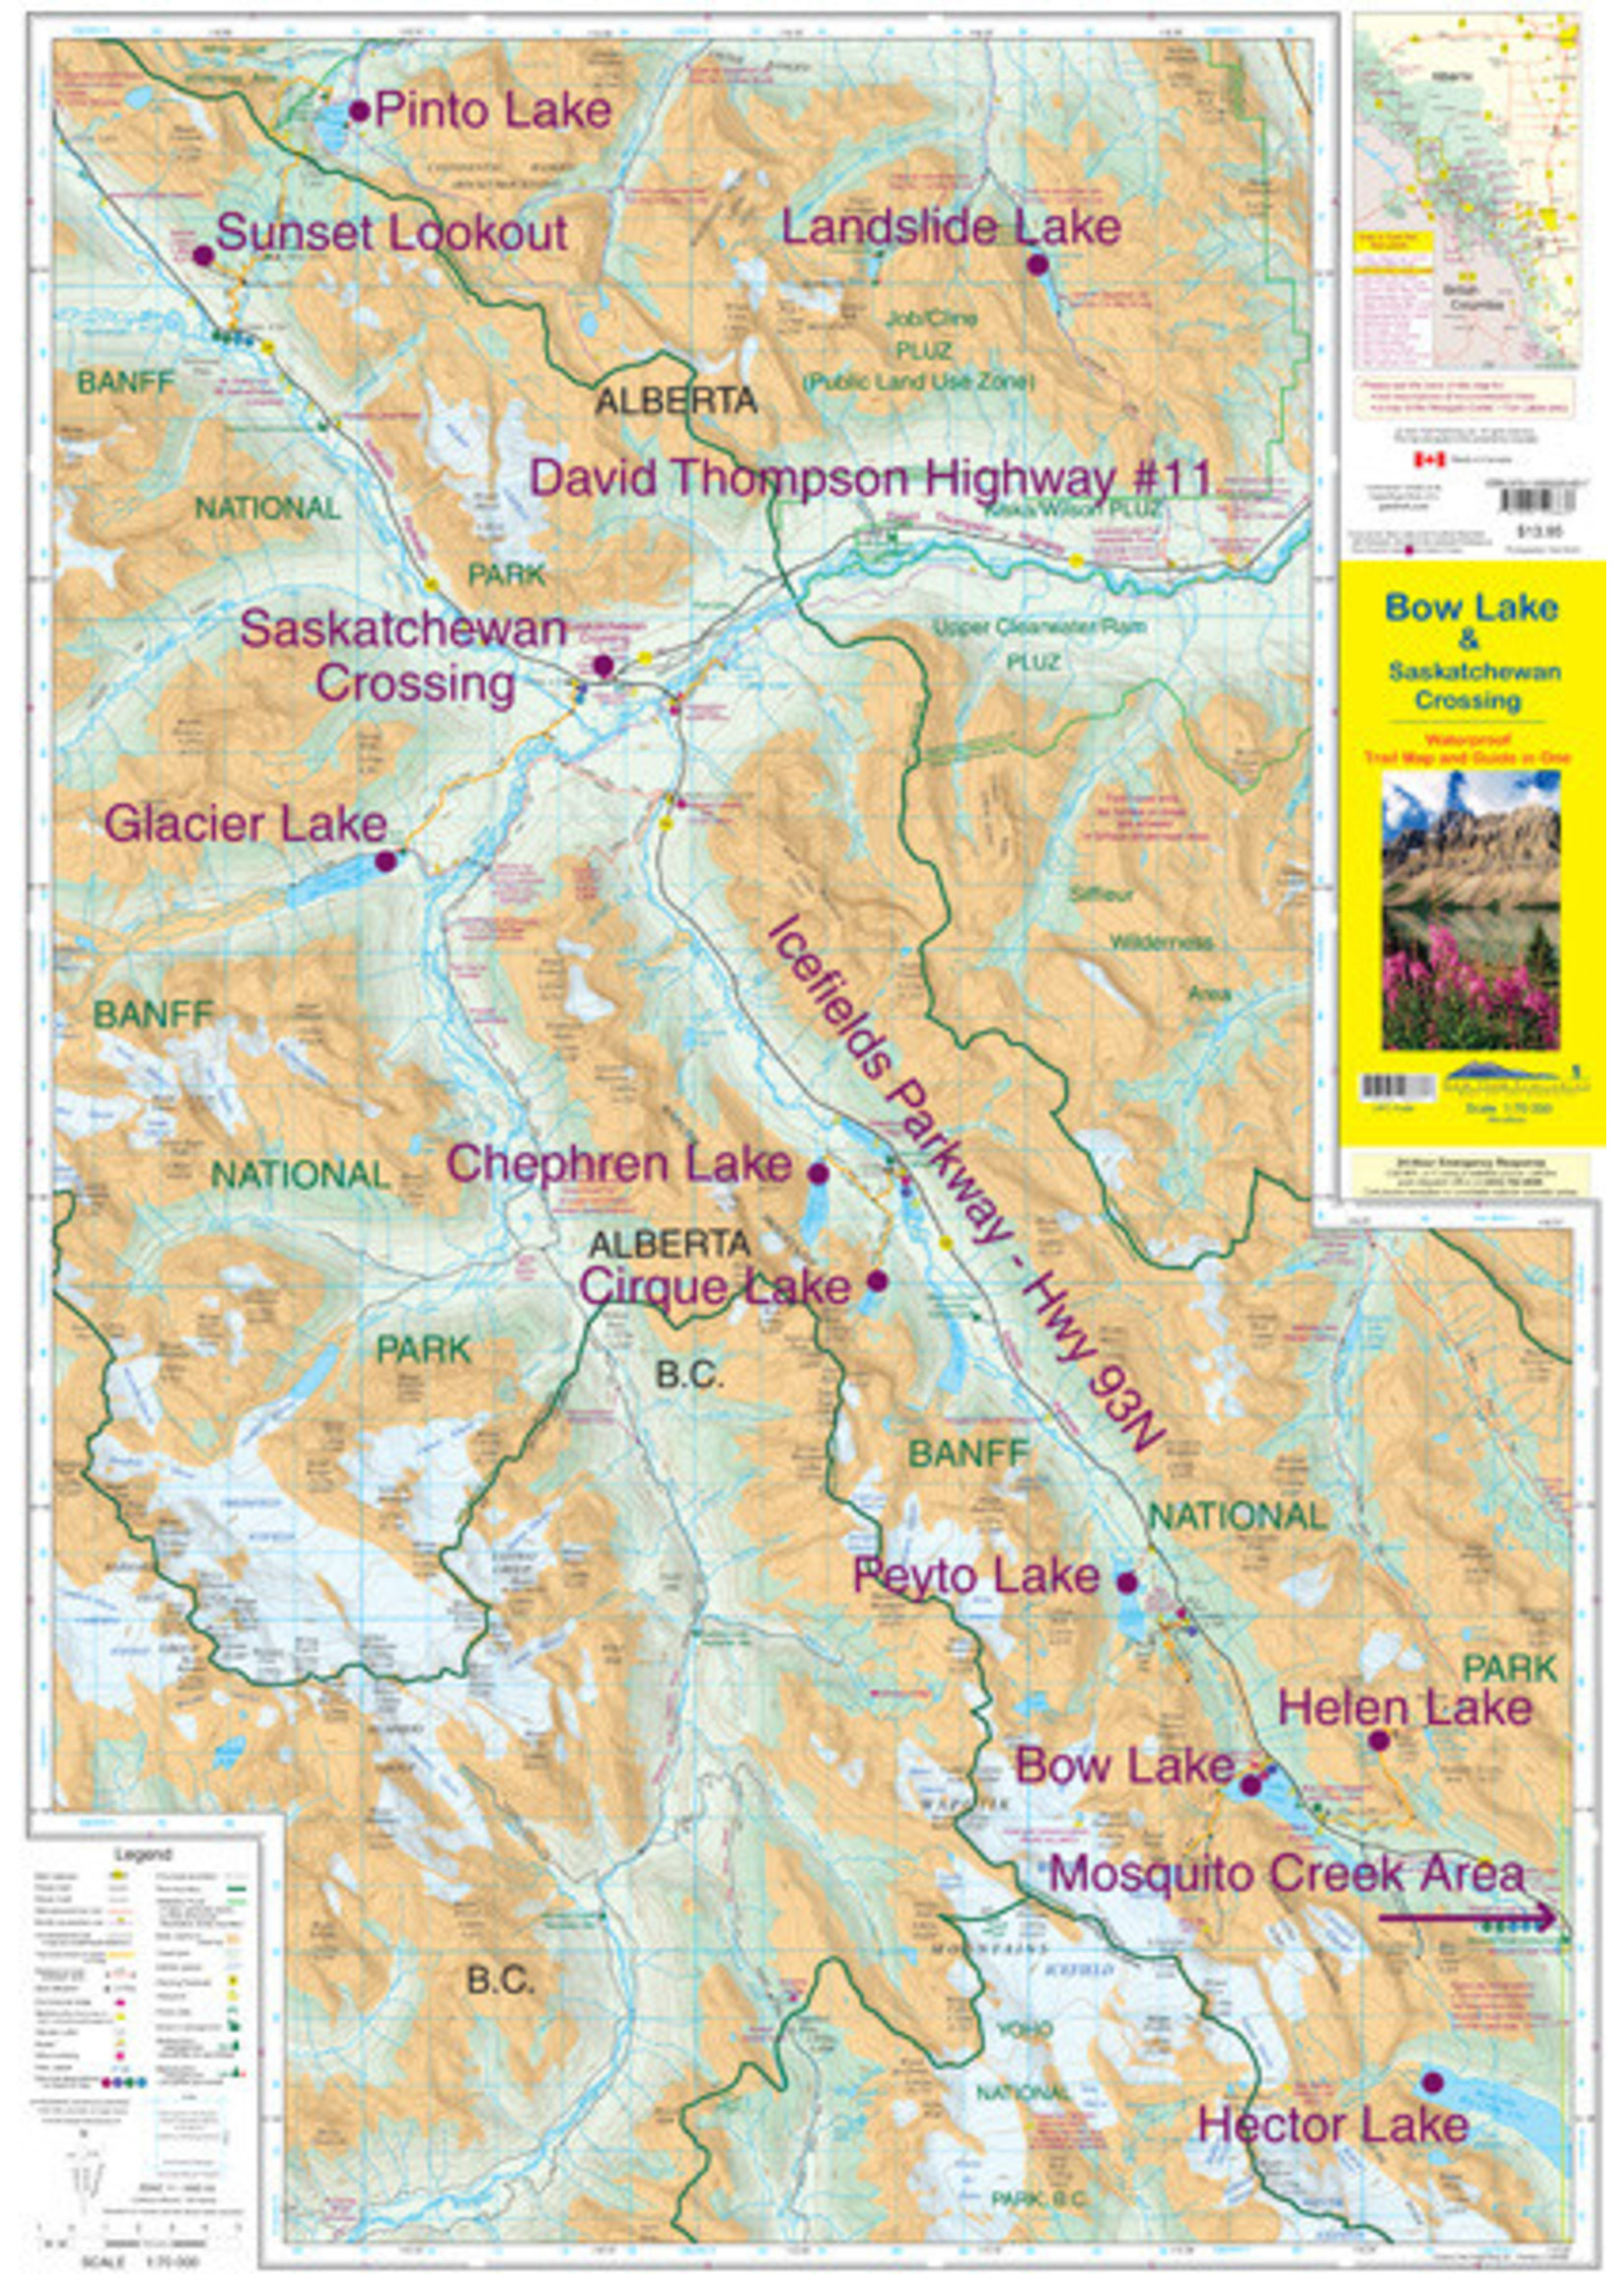 Carte Gemtrek Bow Lake & Saskatchewan Crossing